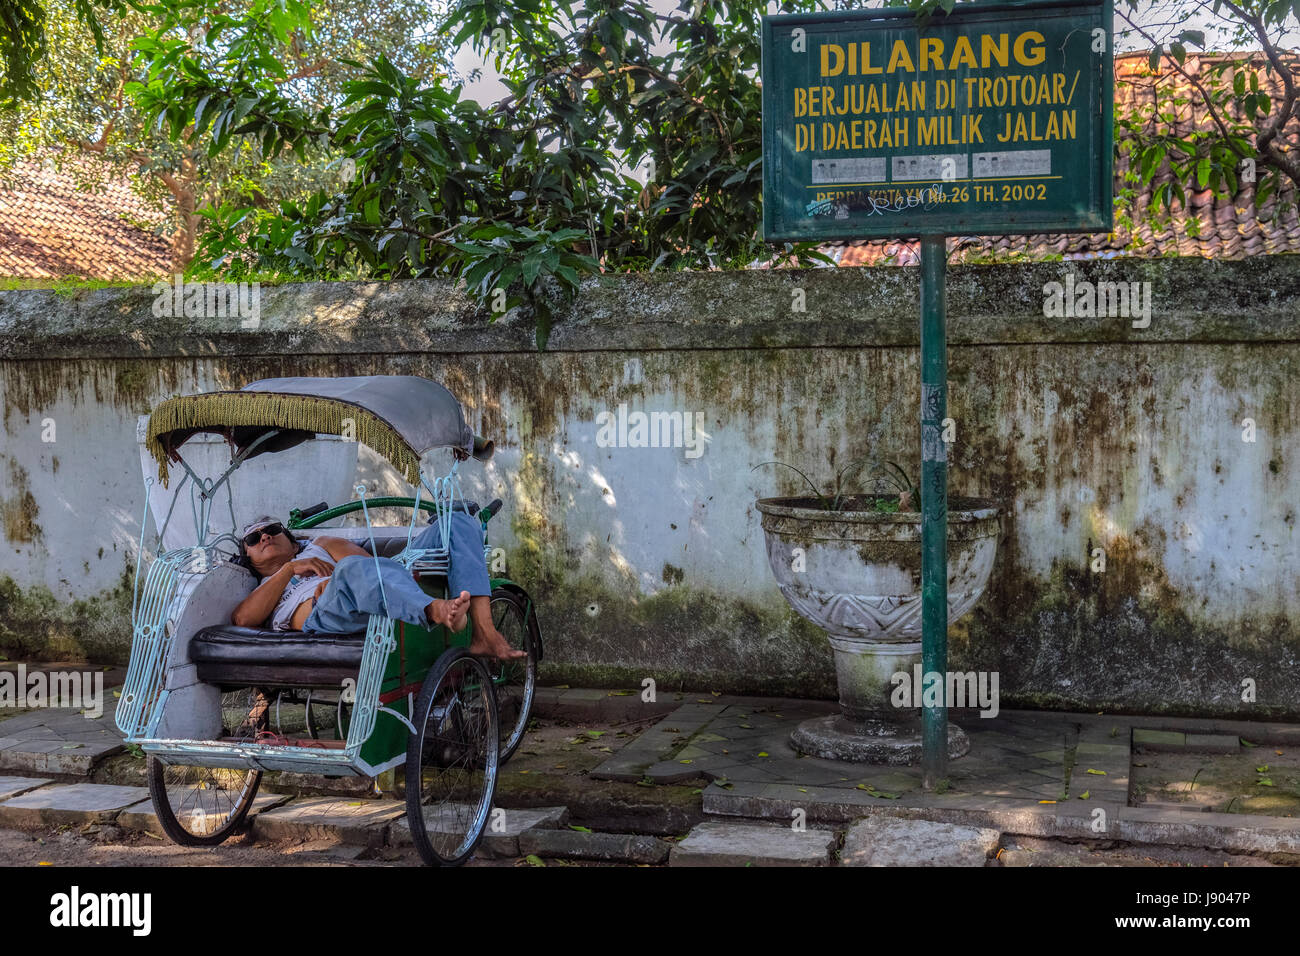 Trishaws in the streets of Yogyakarta, Java, Indonesia, Asia Stock Photo